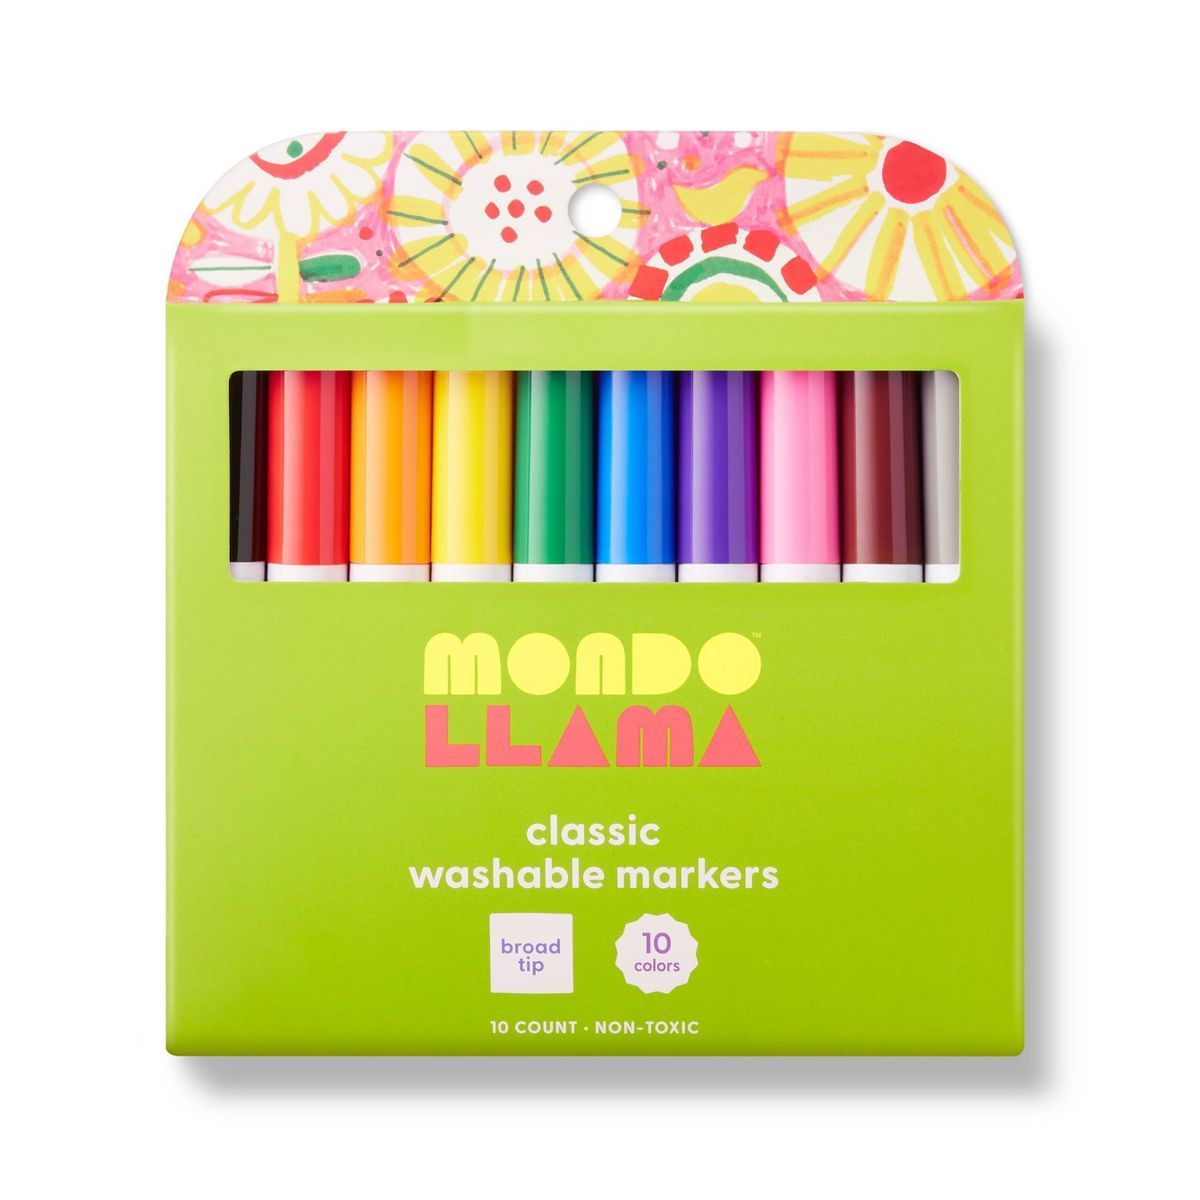 10ct Washable Markers Broad Tip Classic Colors - Mondo Llama™ | Target